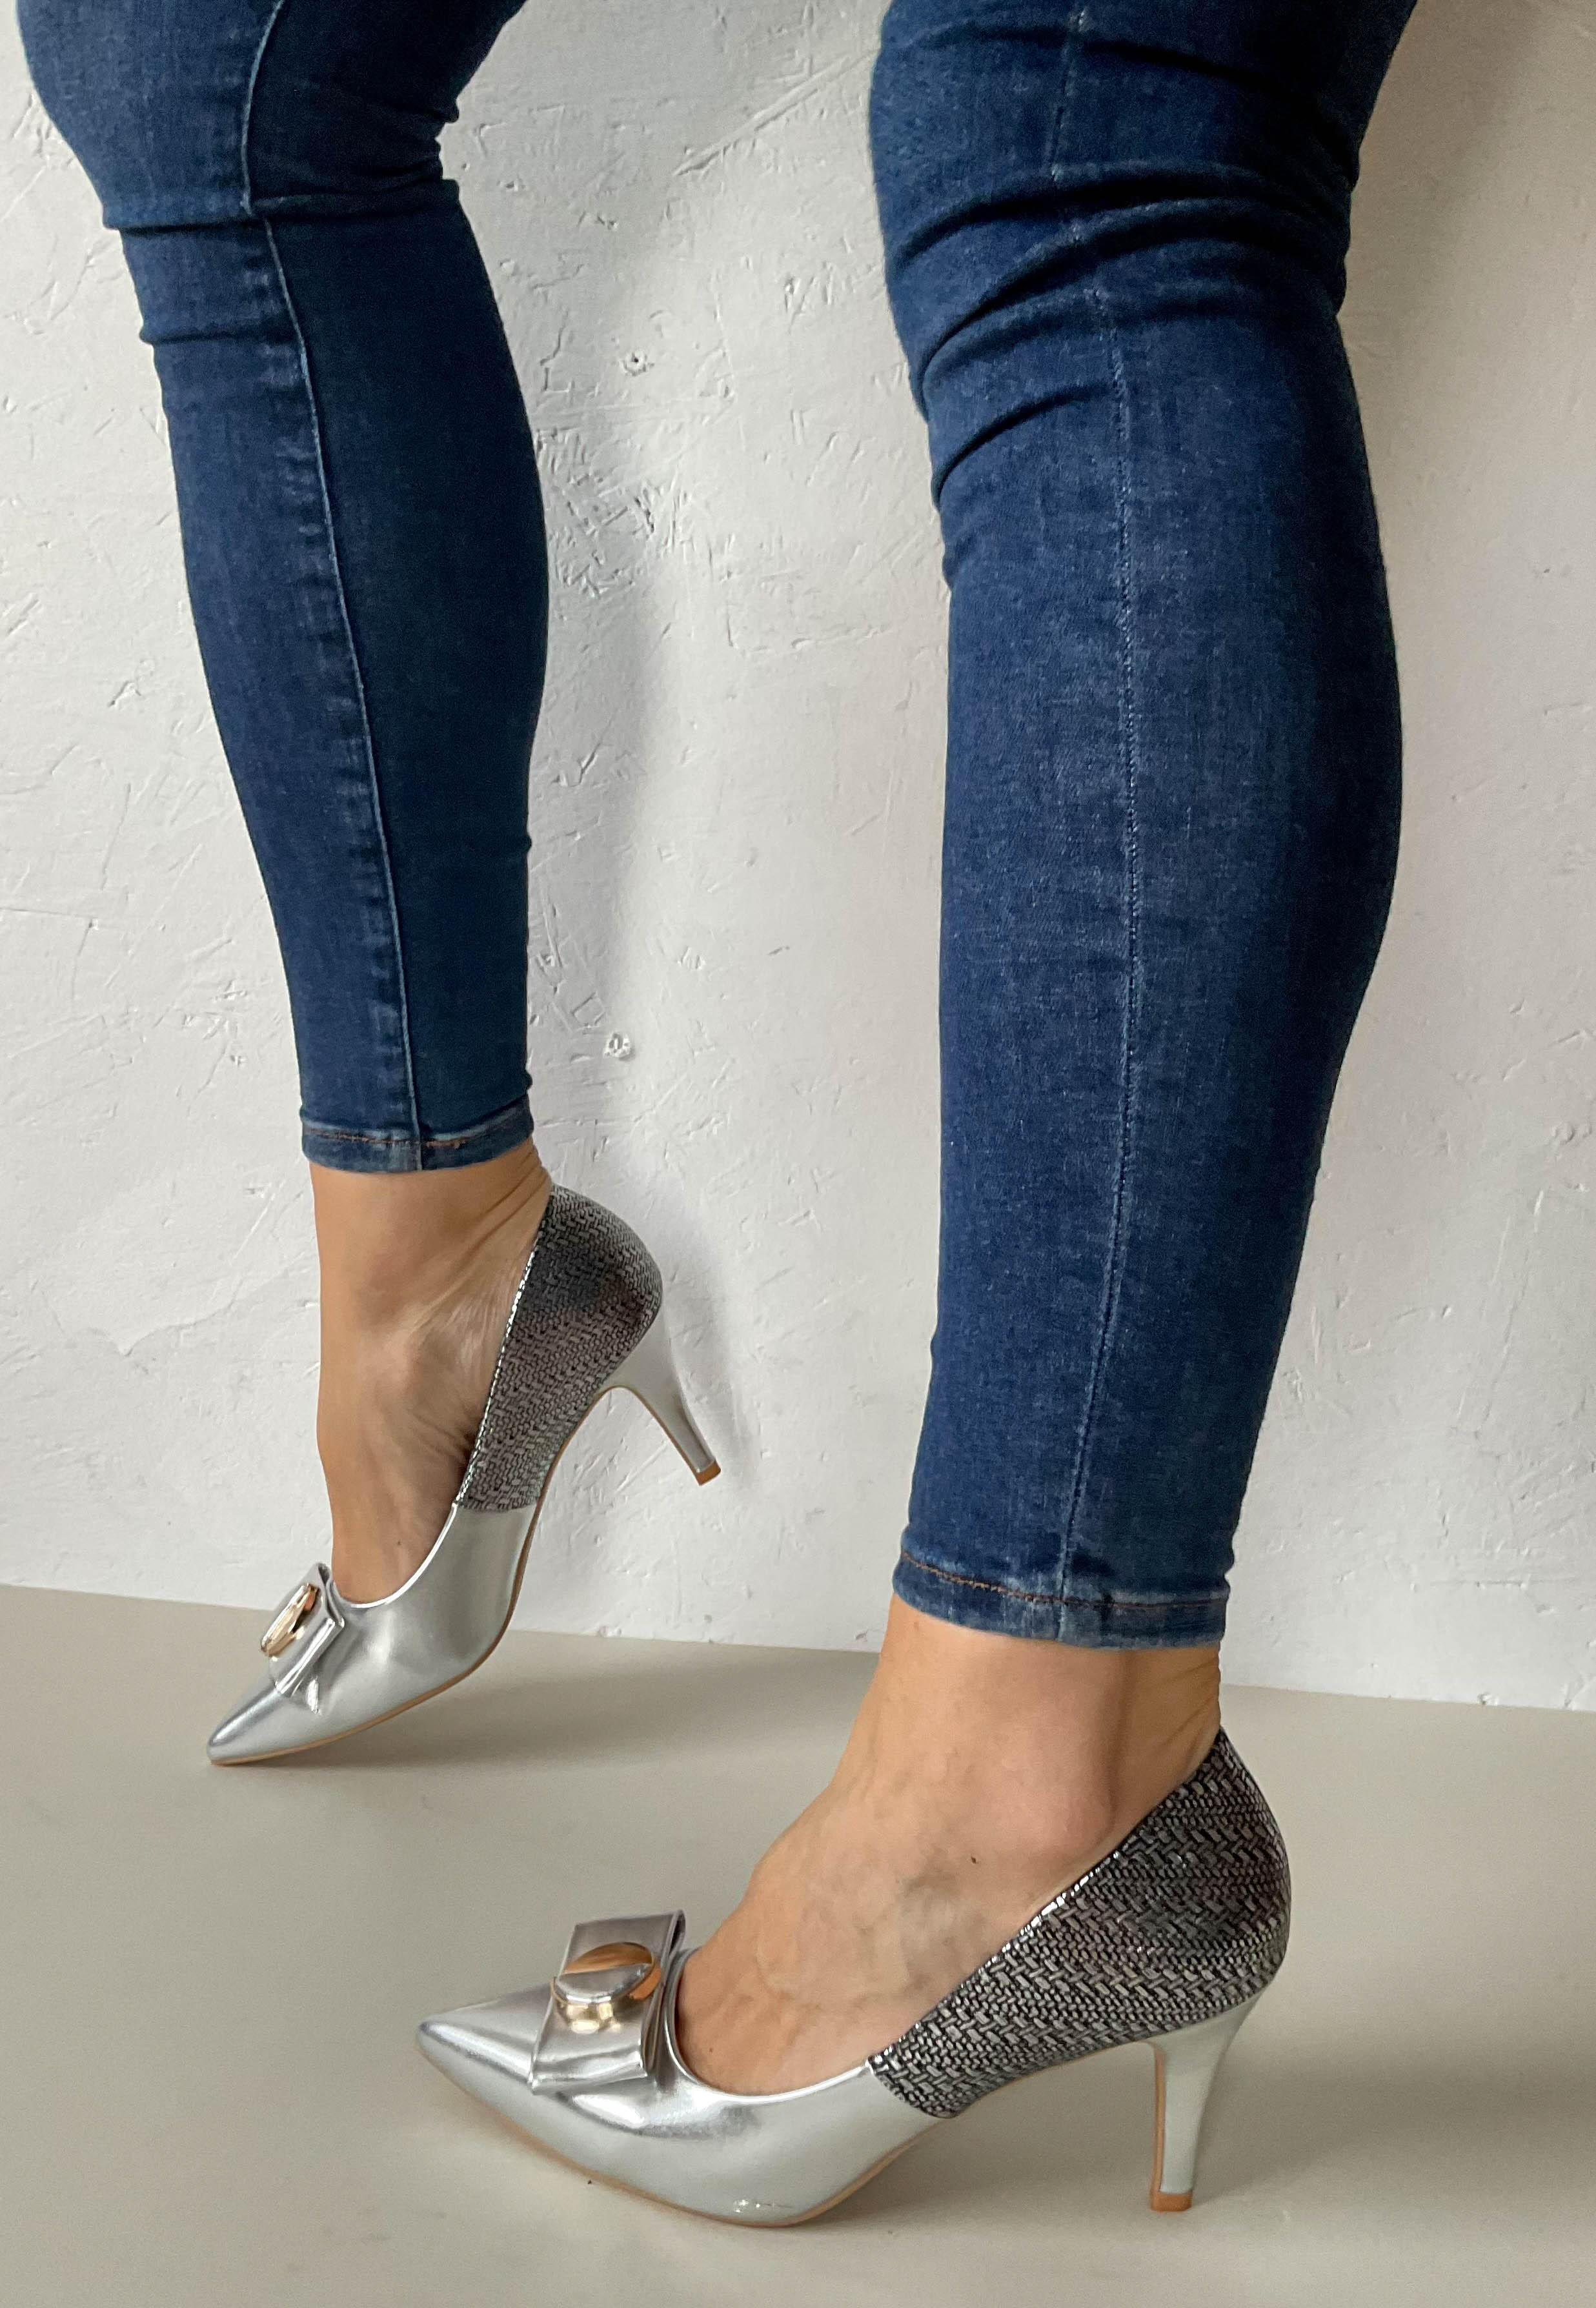 mettalic heels